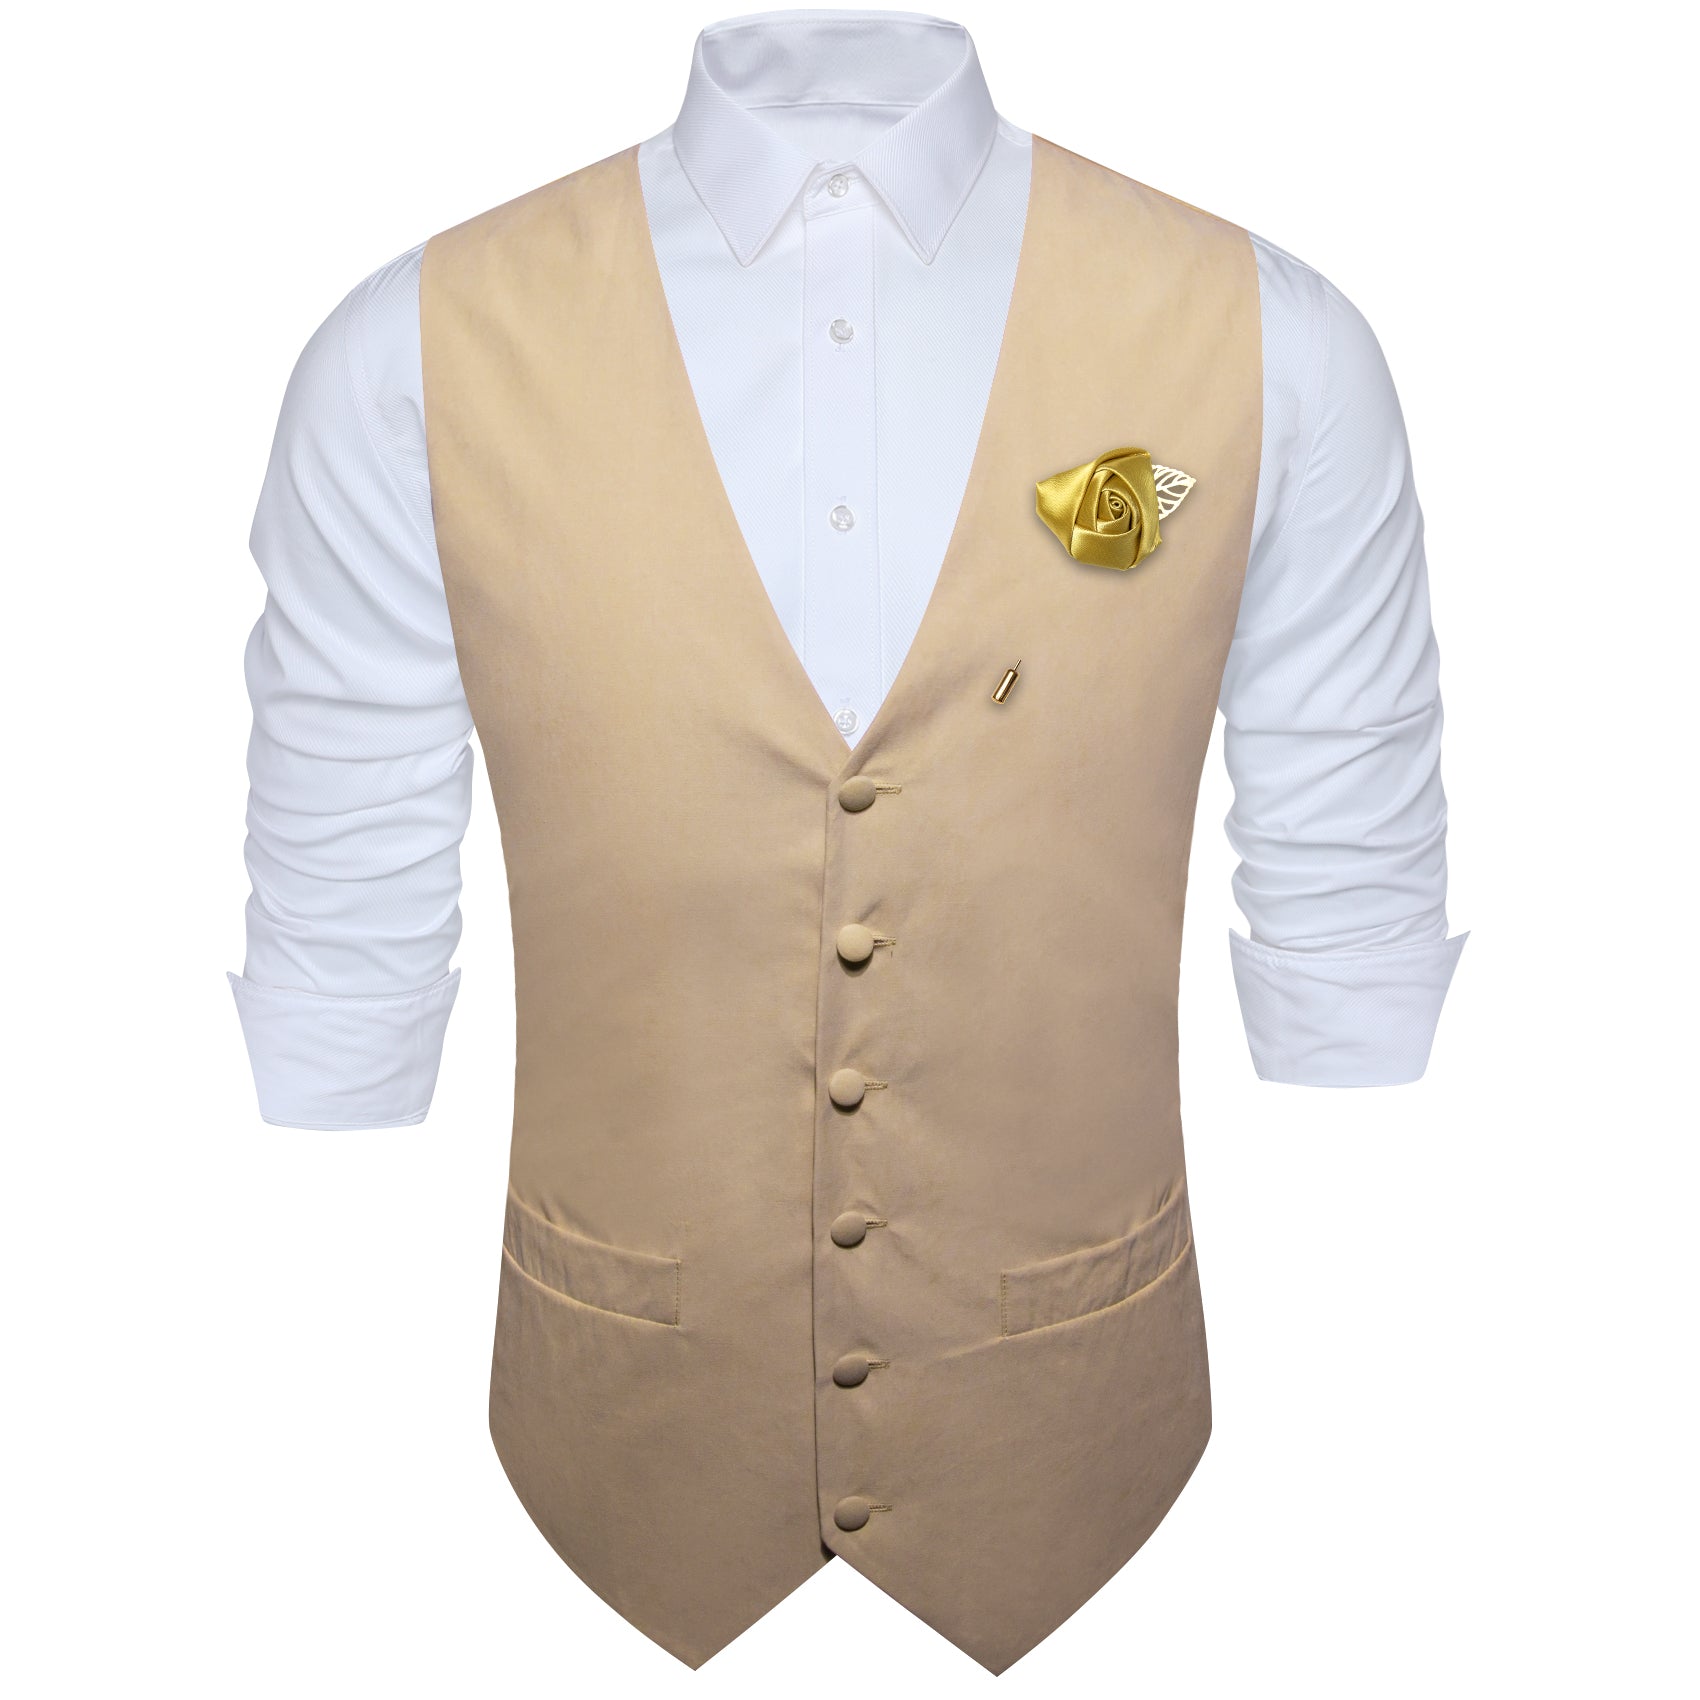 Barry.wang Men's Formal Vest Yellow Solid Silk Waistcoat with Lapel Pin Vest Set